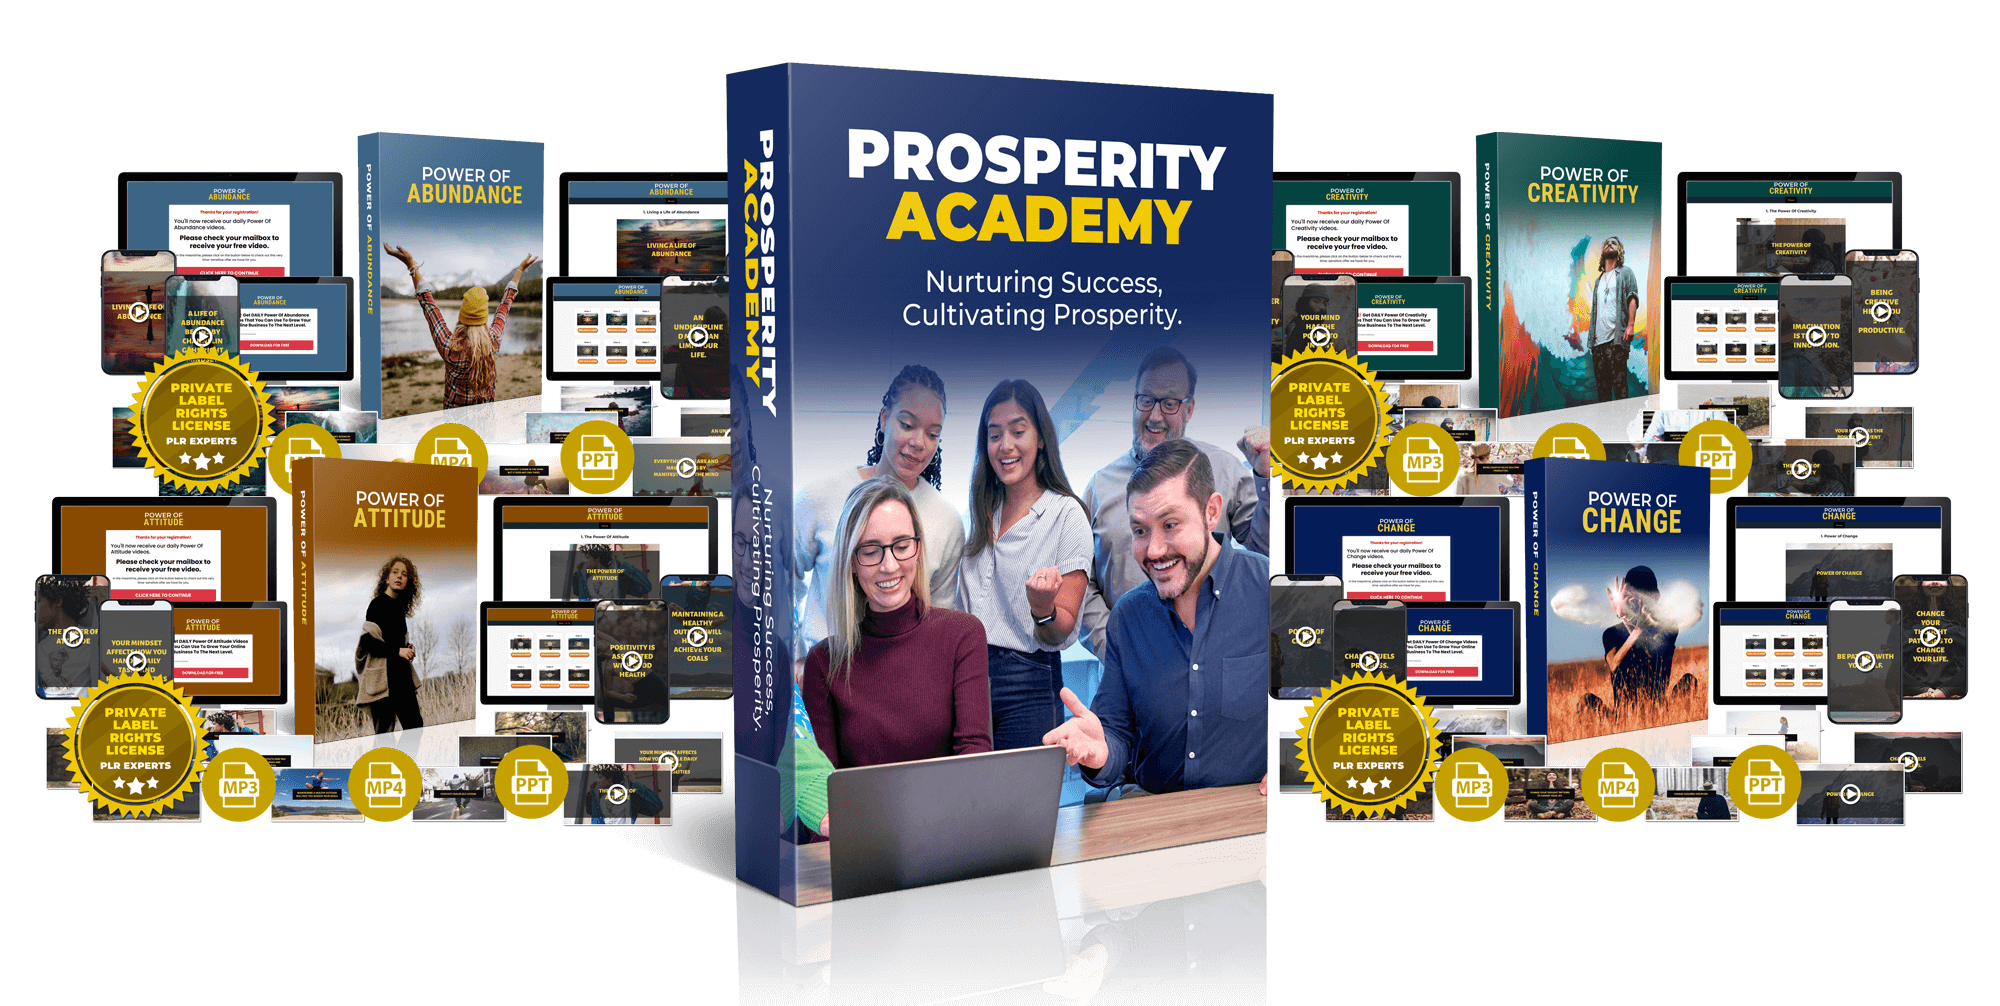 The Prosperity Academy